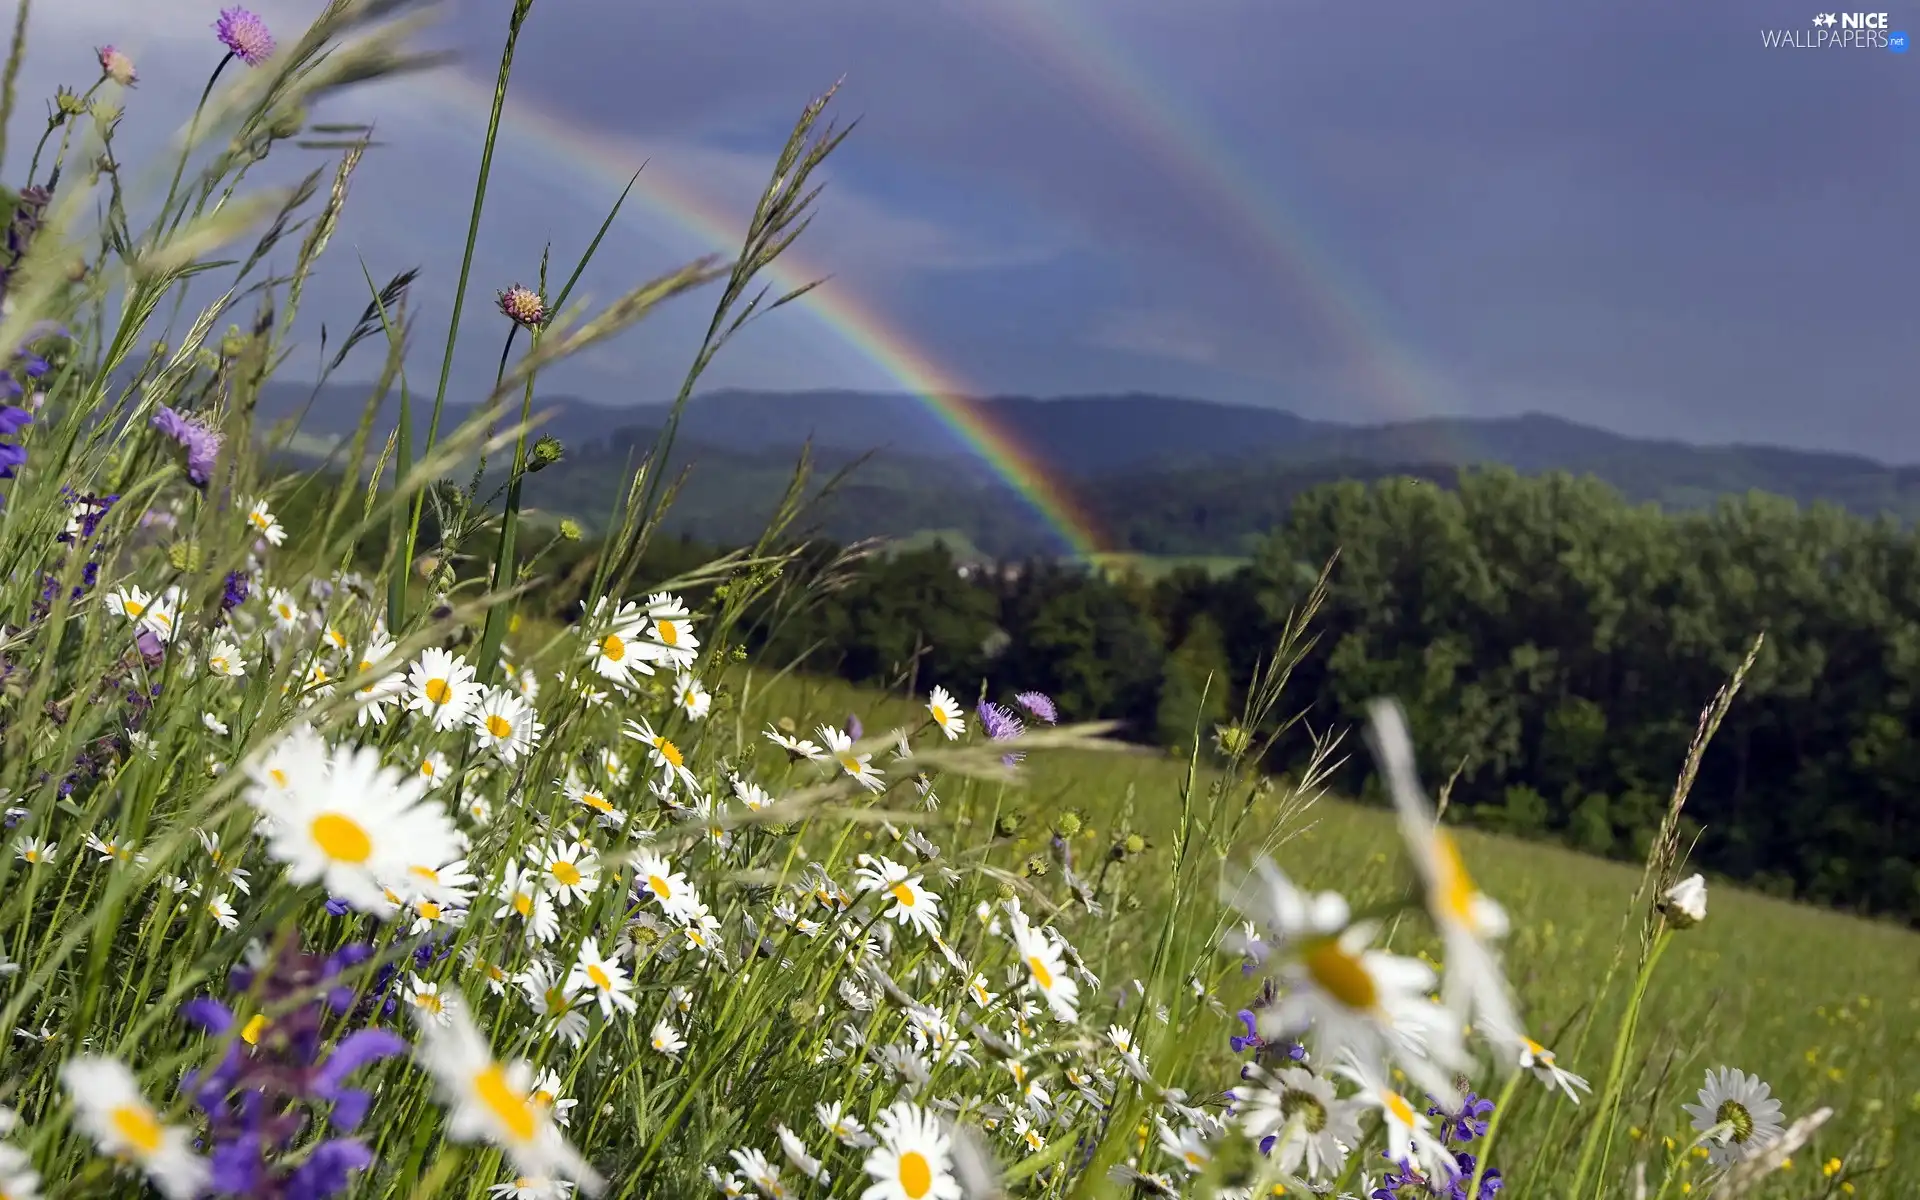 Great Rainbows, Meadow, Flowers